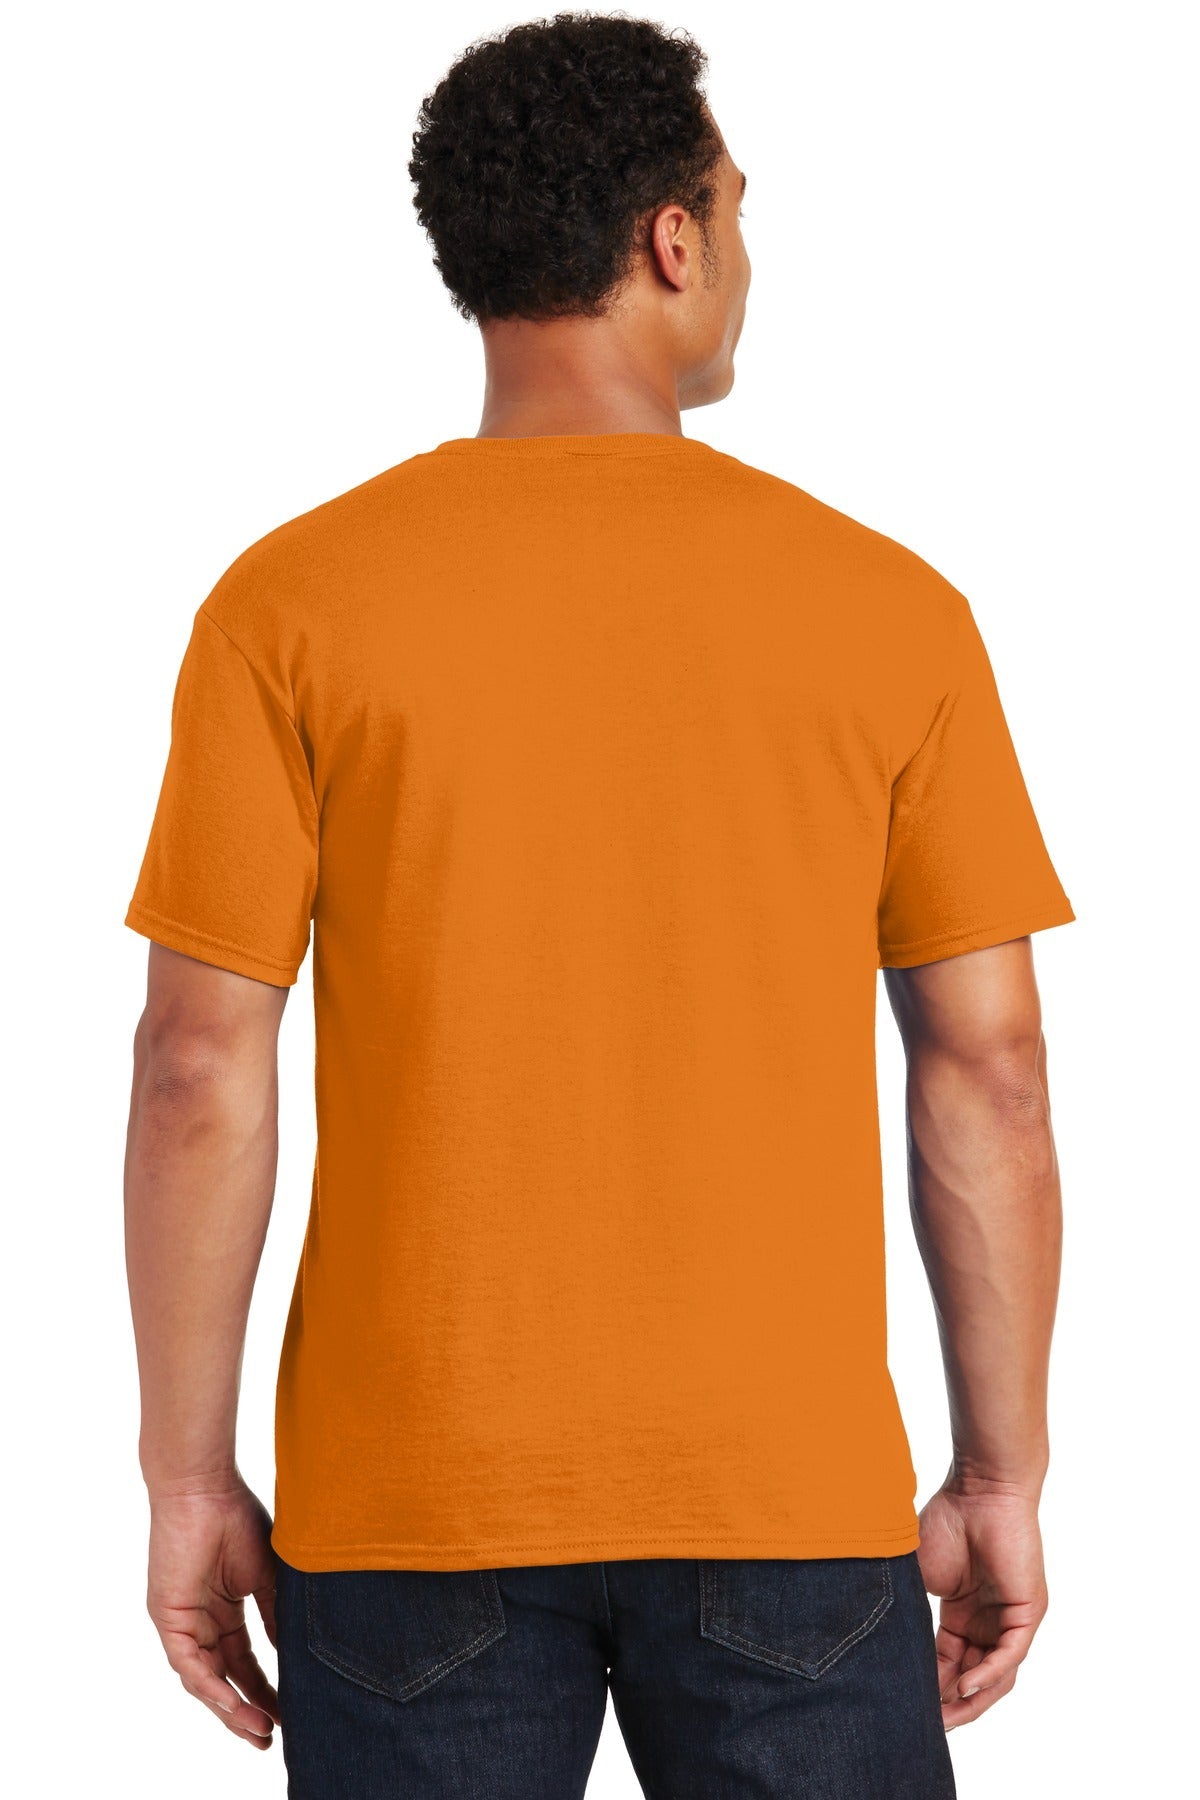 JERZEES® - Dri-Power® 50/50 Cotton/Poly T-Shirt. 29M [Tennessee Orange] - DFW Impression